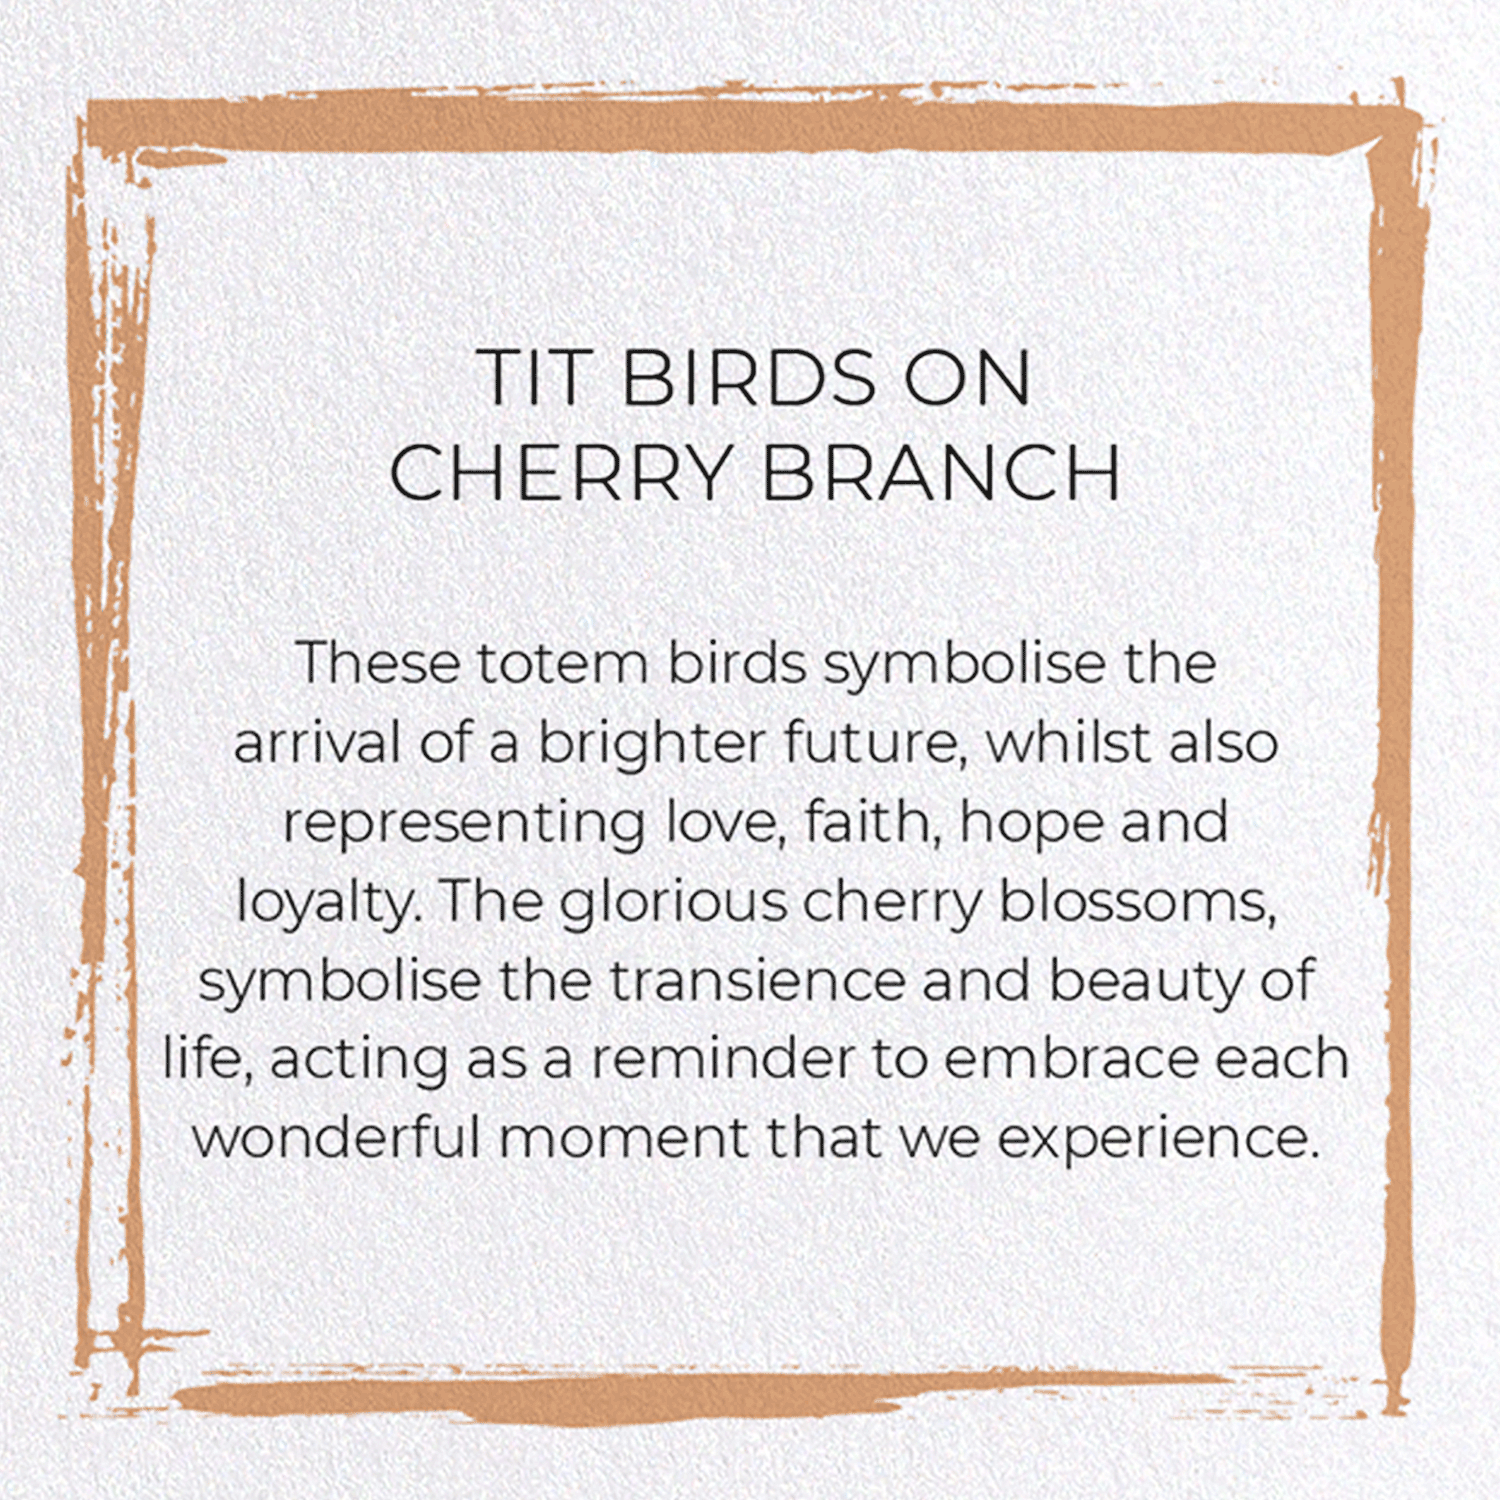 TIT BIRDS ON CHERRY BRANCH: Japanese Greeting Card